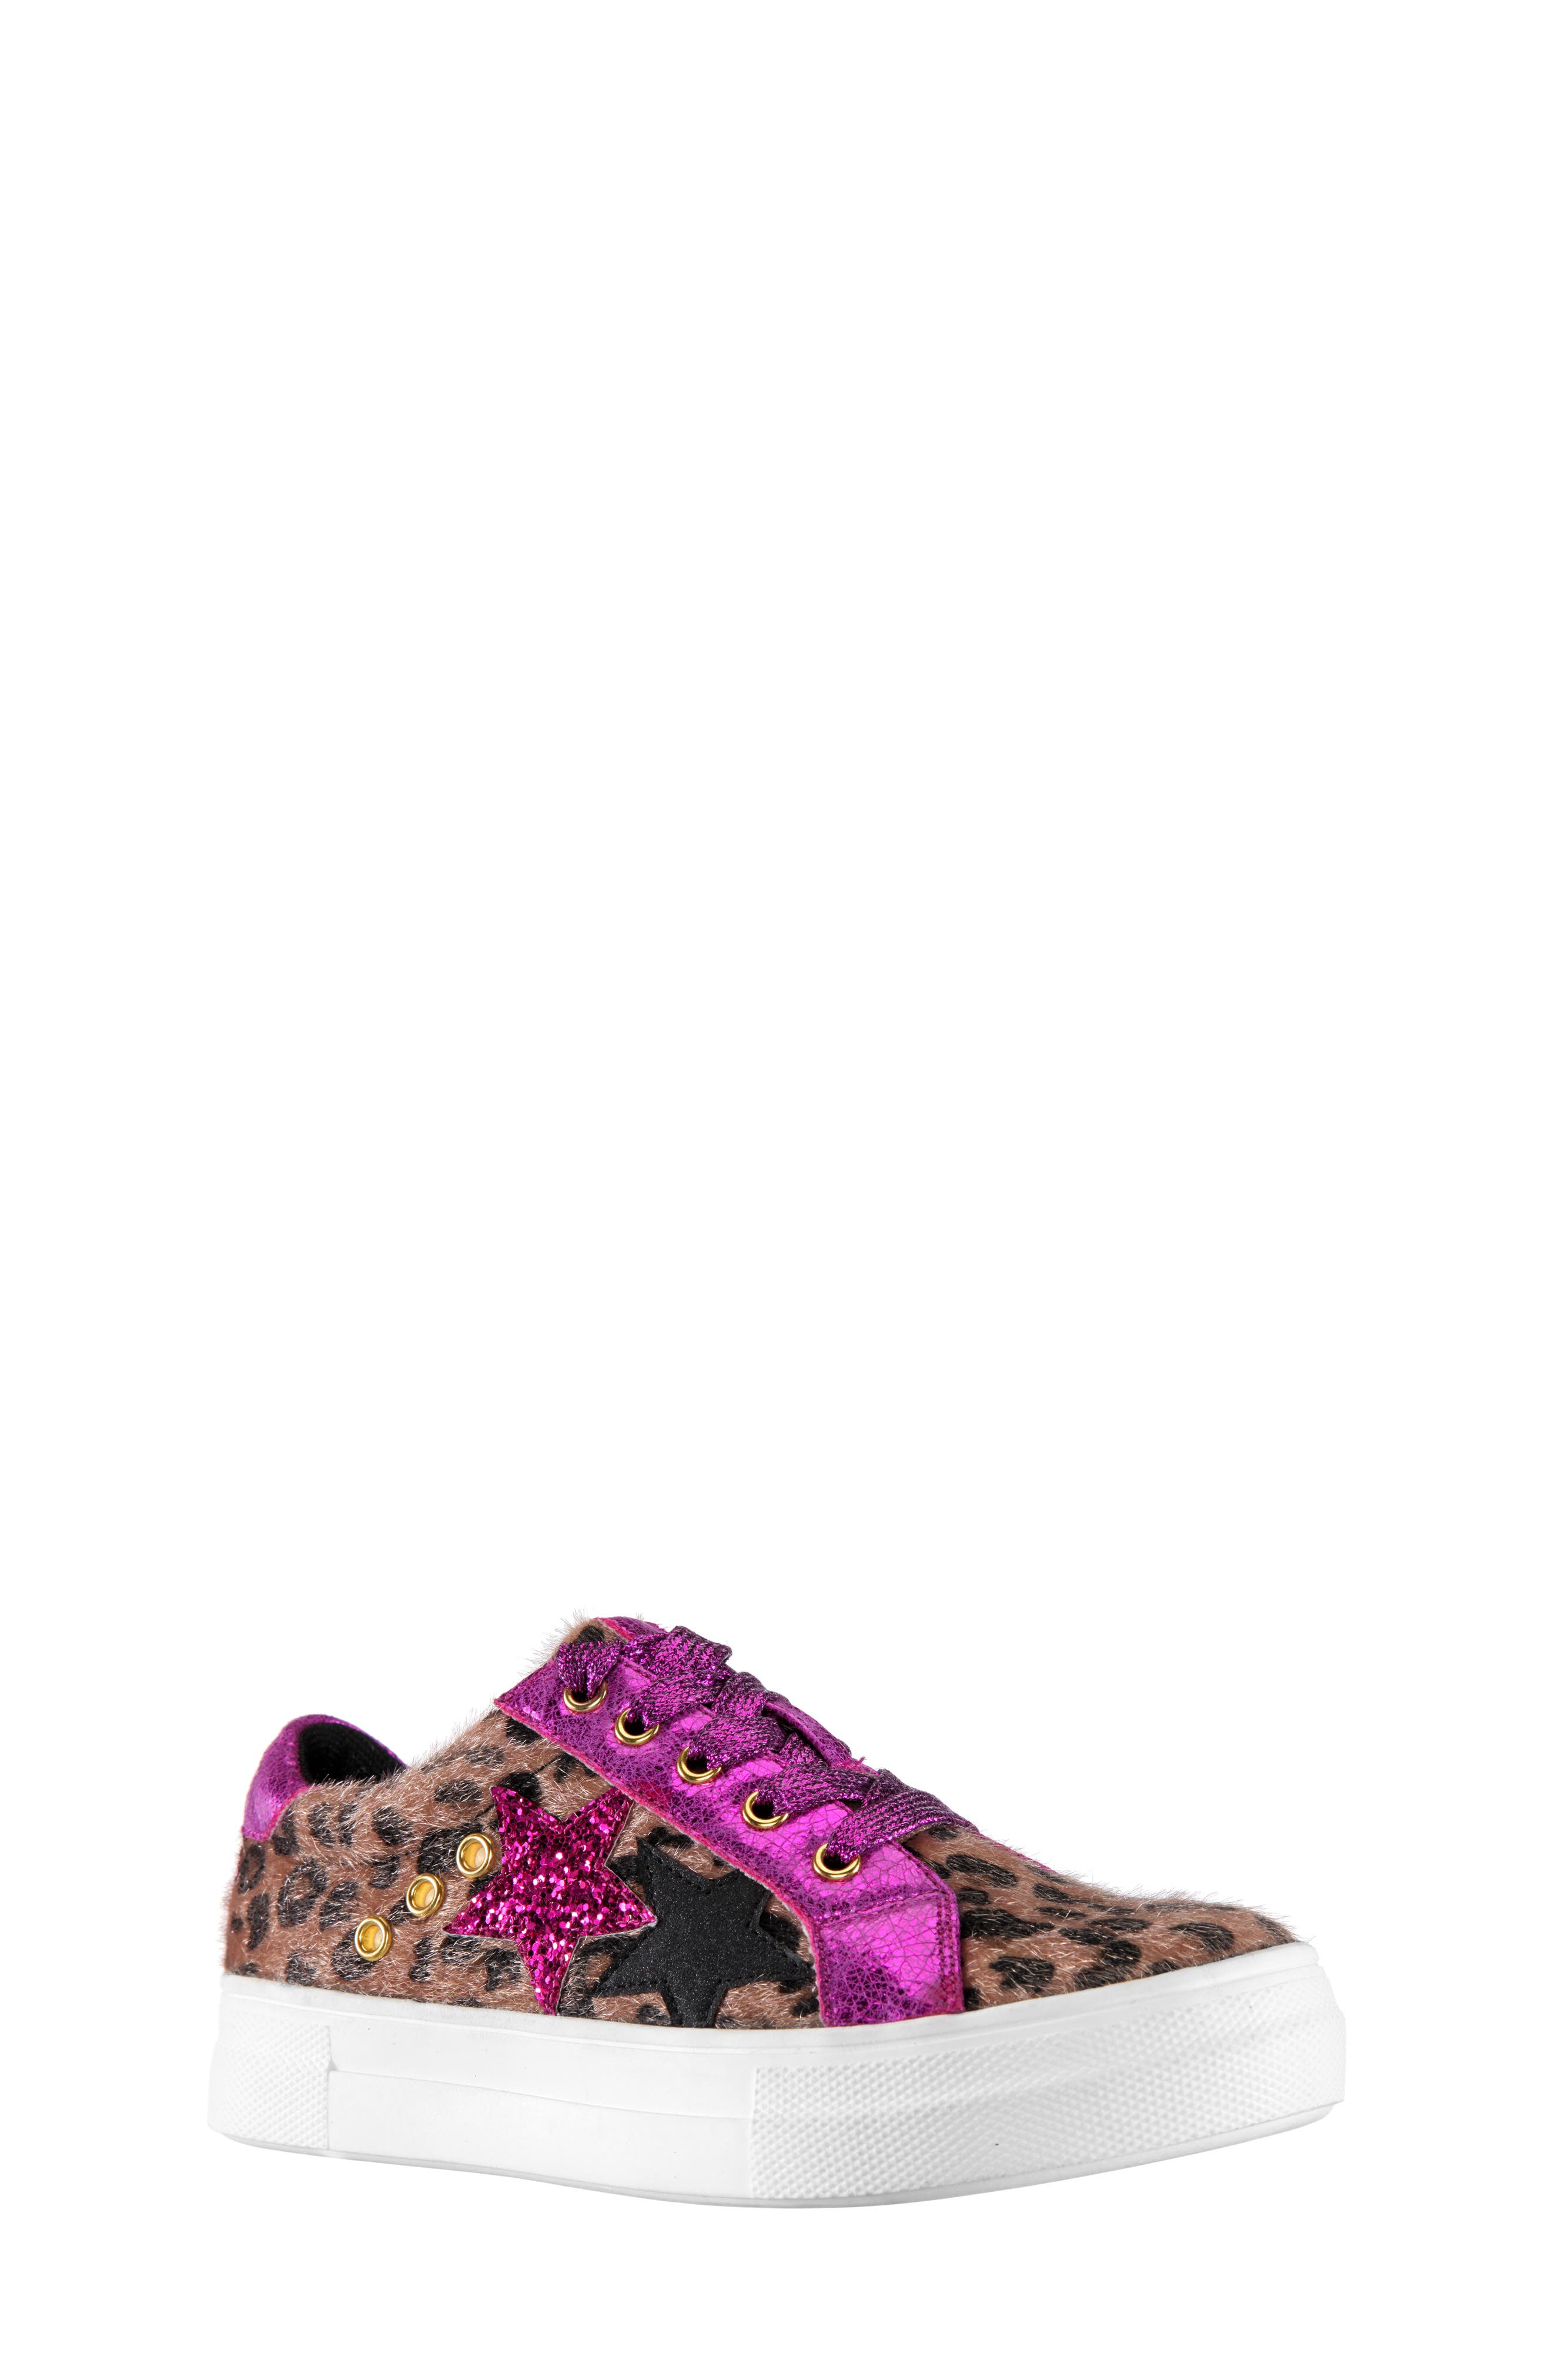 UPC 794378405191 product image for Girl's Nina Lizzet Glitter Sneaker, Size 6 M - Pink | upcitemdb.com